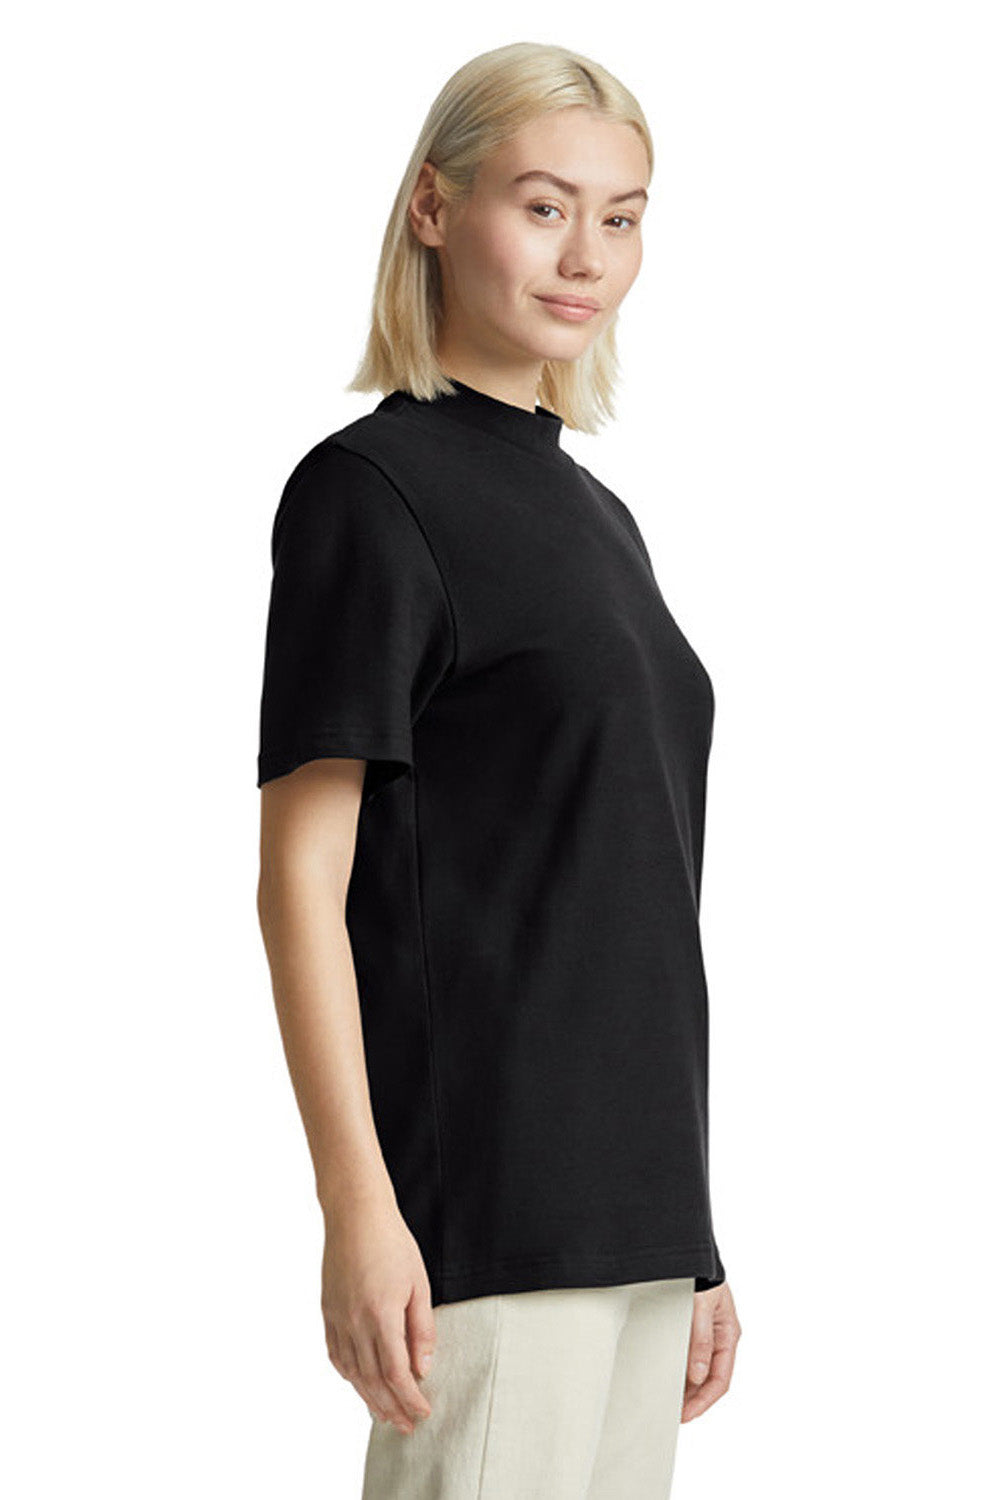 American Apparel 1PQ Mens Short Sleeve Mock Neck T-Shirt Black Model Side